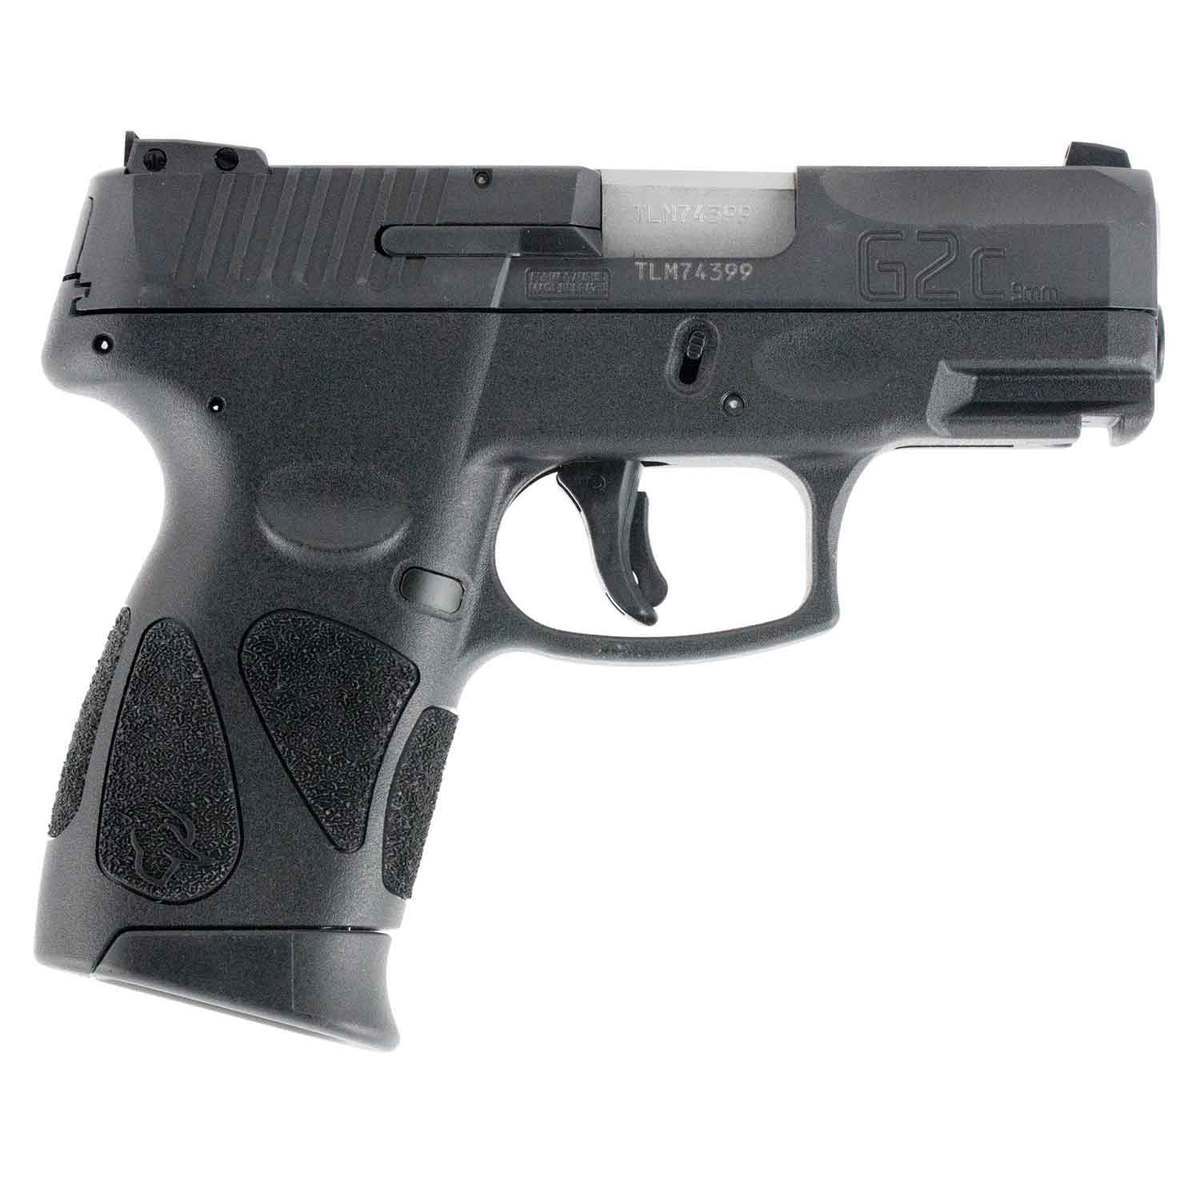 taurus-g2c-9mm-semi-auto-pistol-1500242-1.jpg